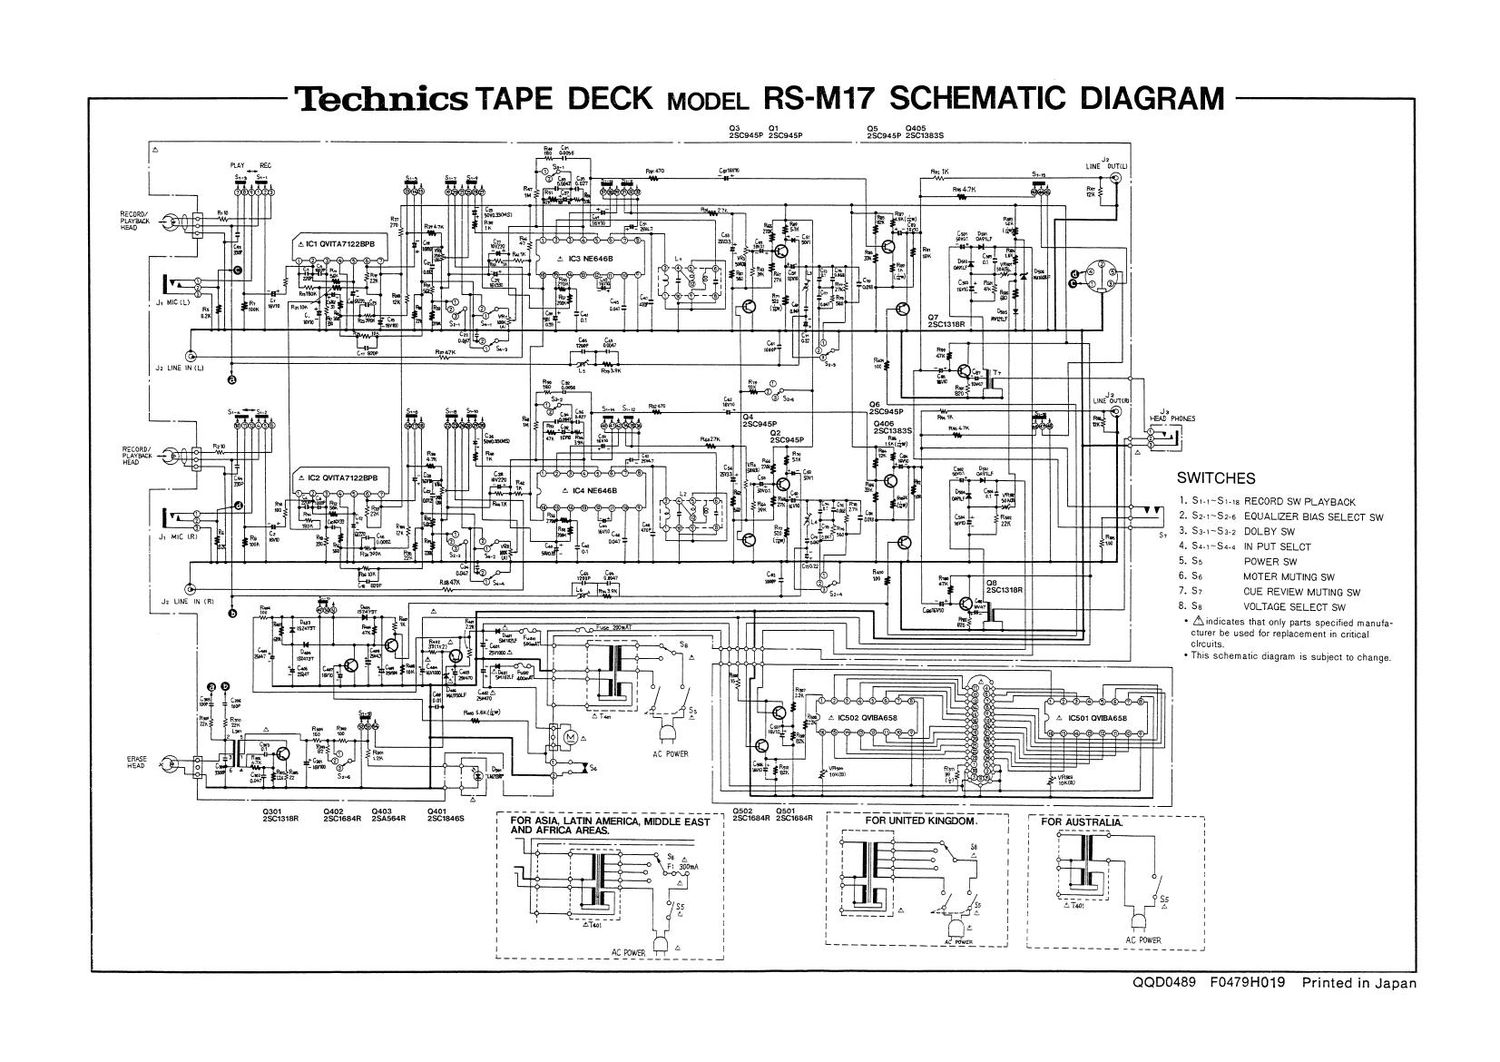 Technics RSM 17 Schematics